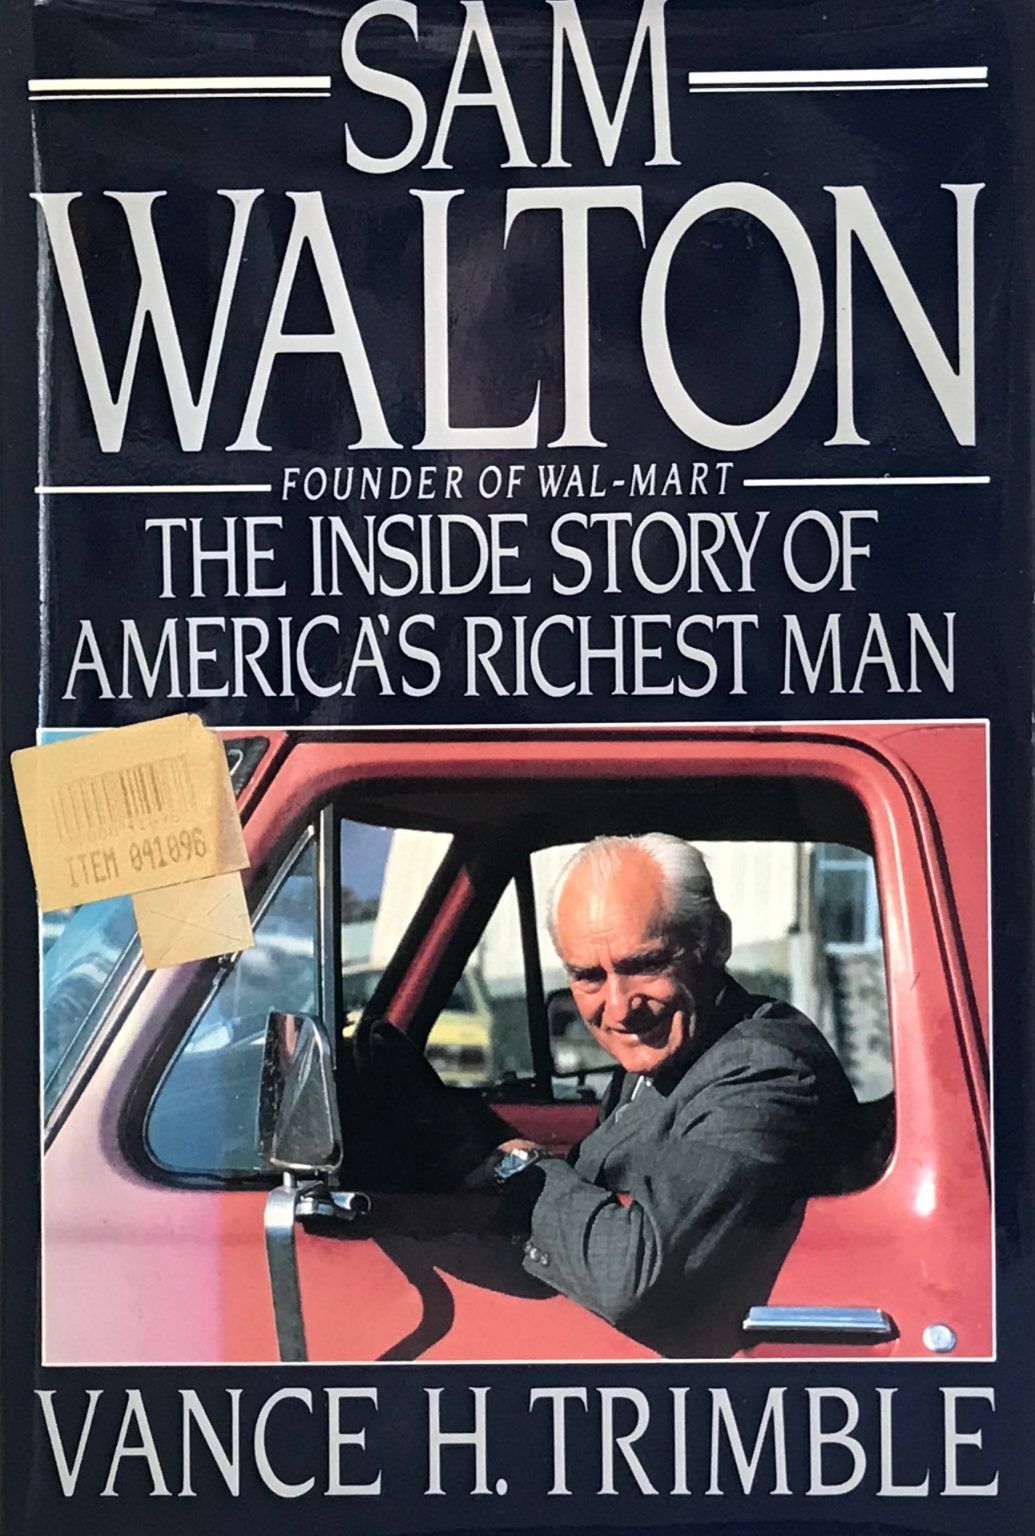 SAM WALTON: The Inside Story of America's Richest Man